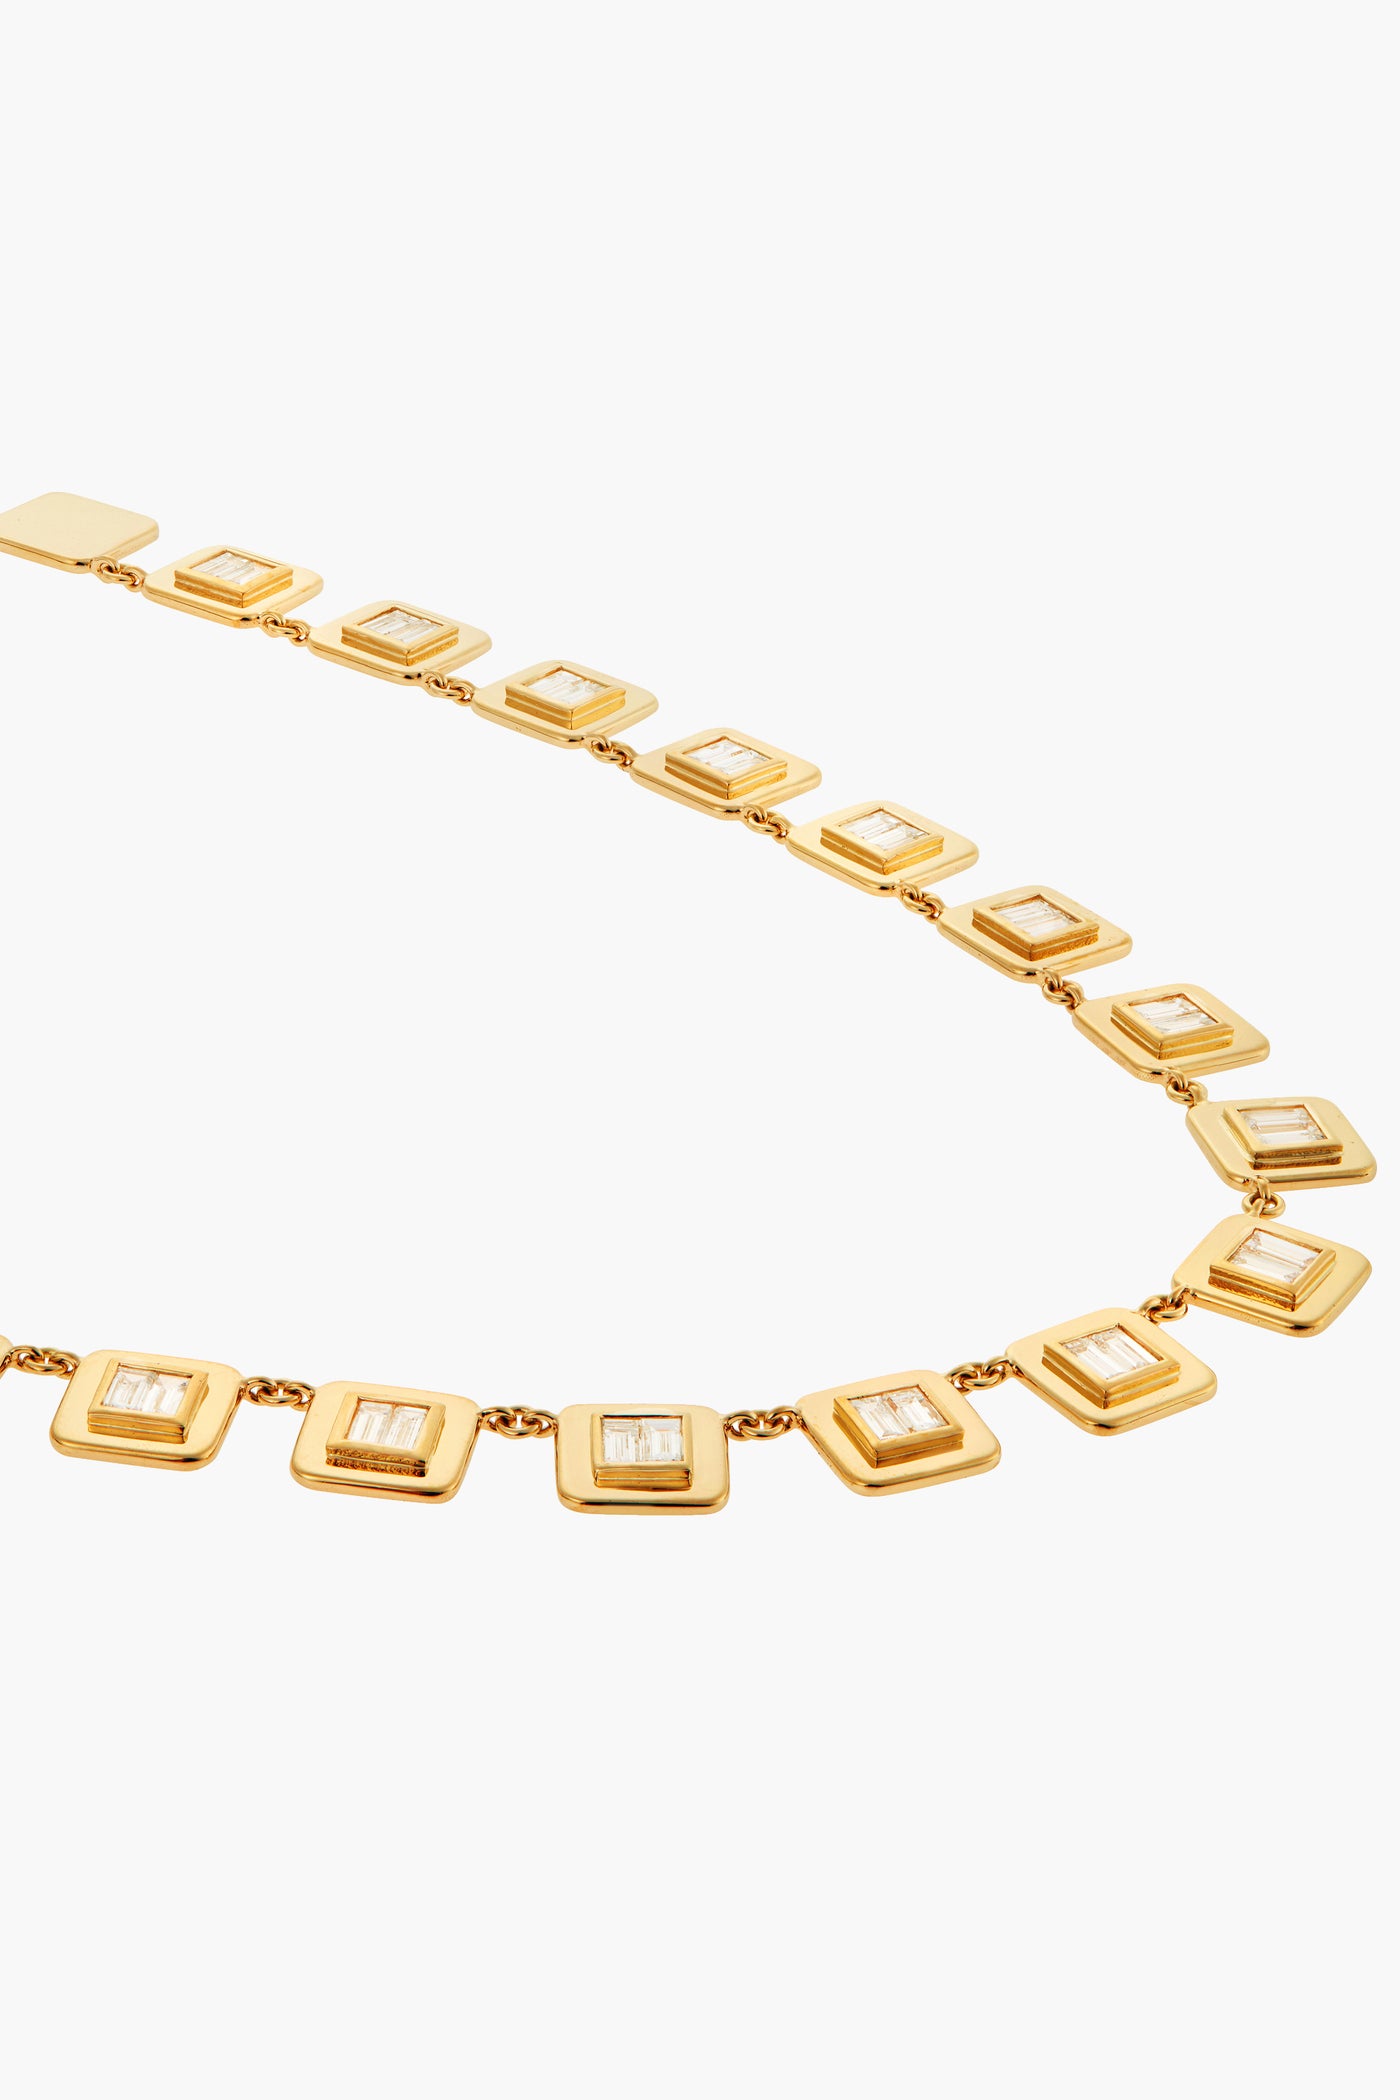 Ileana-Makri-18K-Yellow-Gold-and-Diamond-Tile-Necklace-Amarees